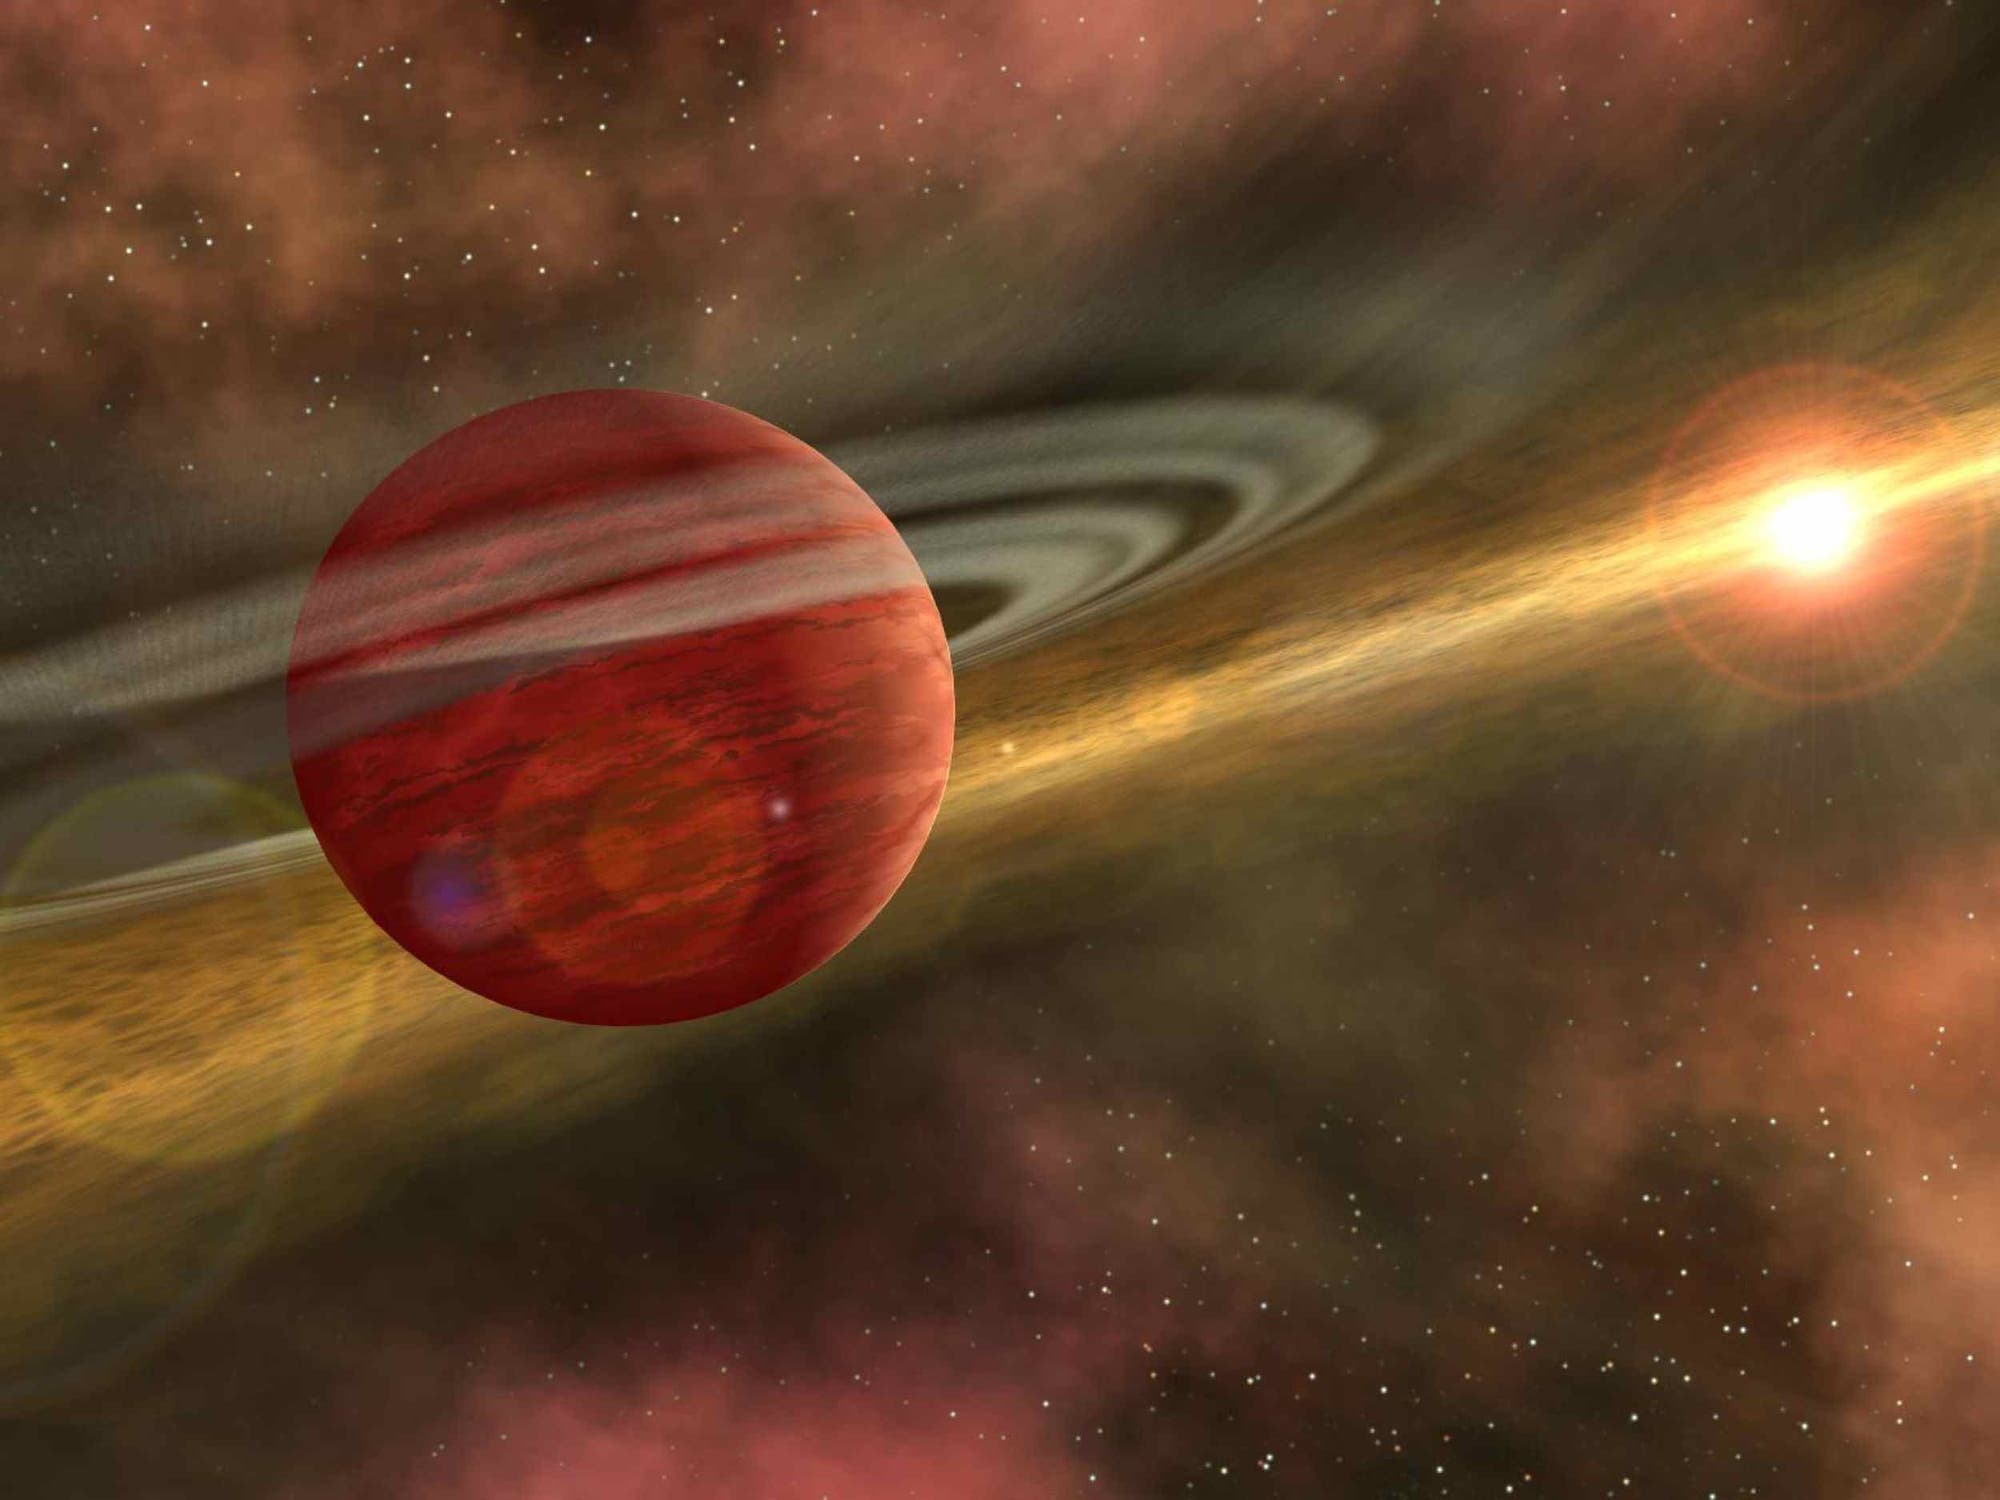 Exoplanet HD106906